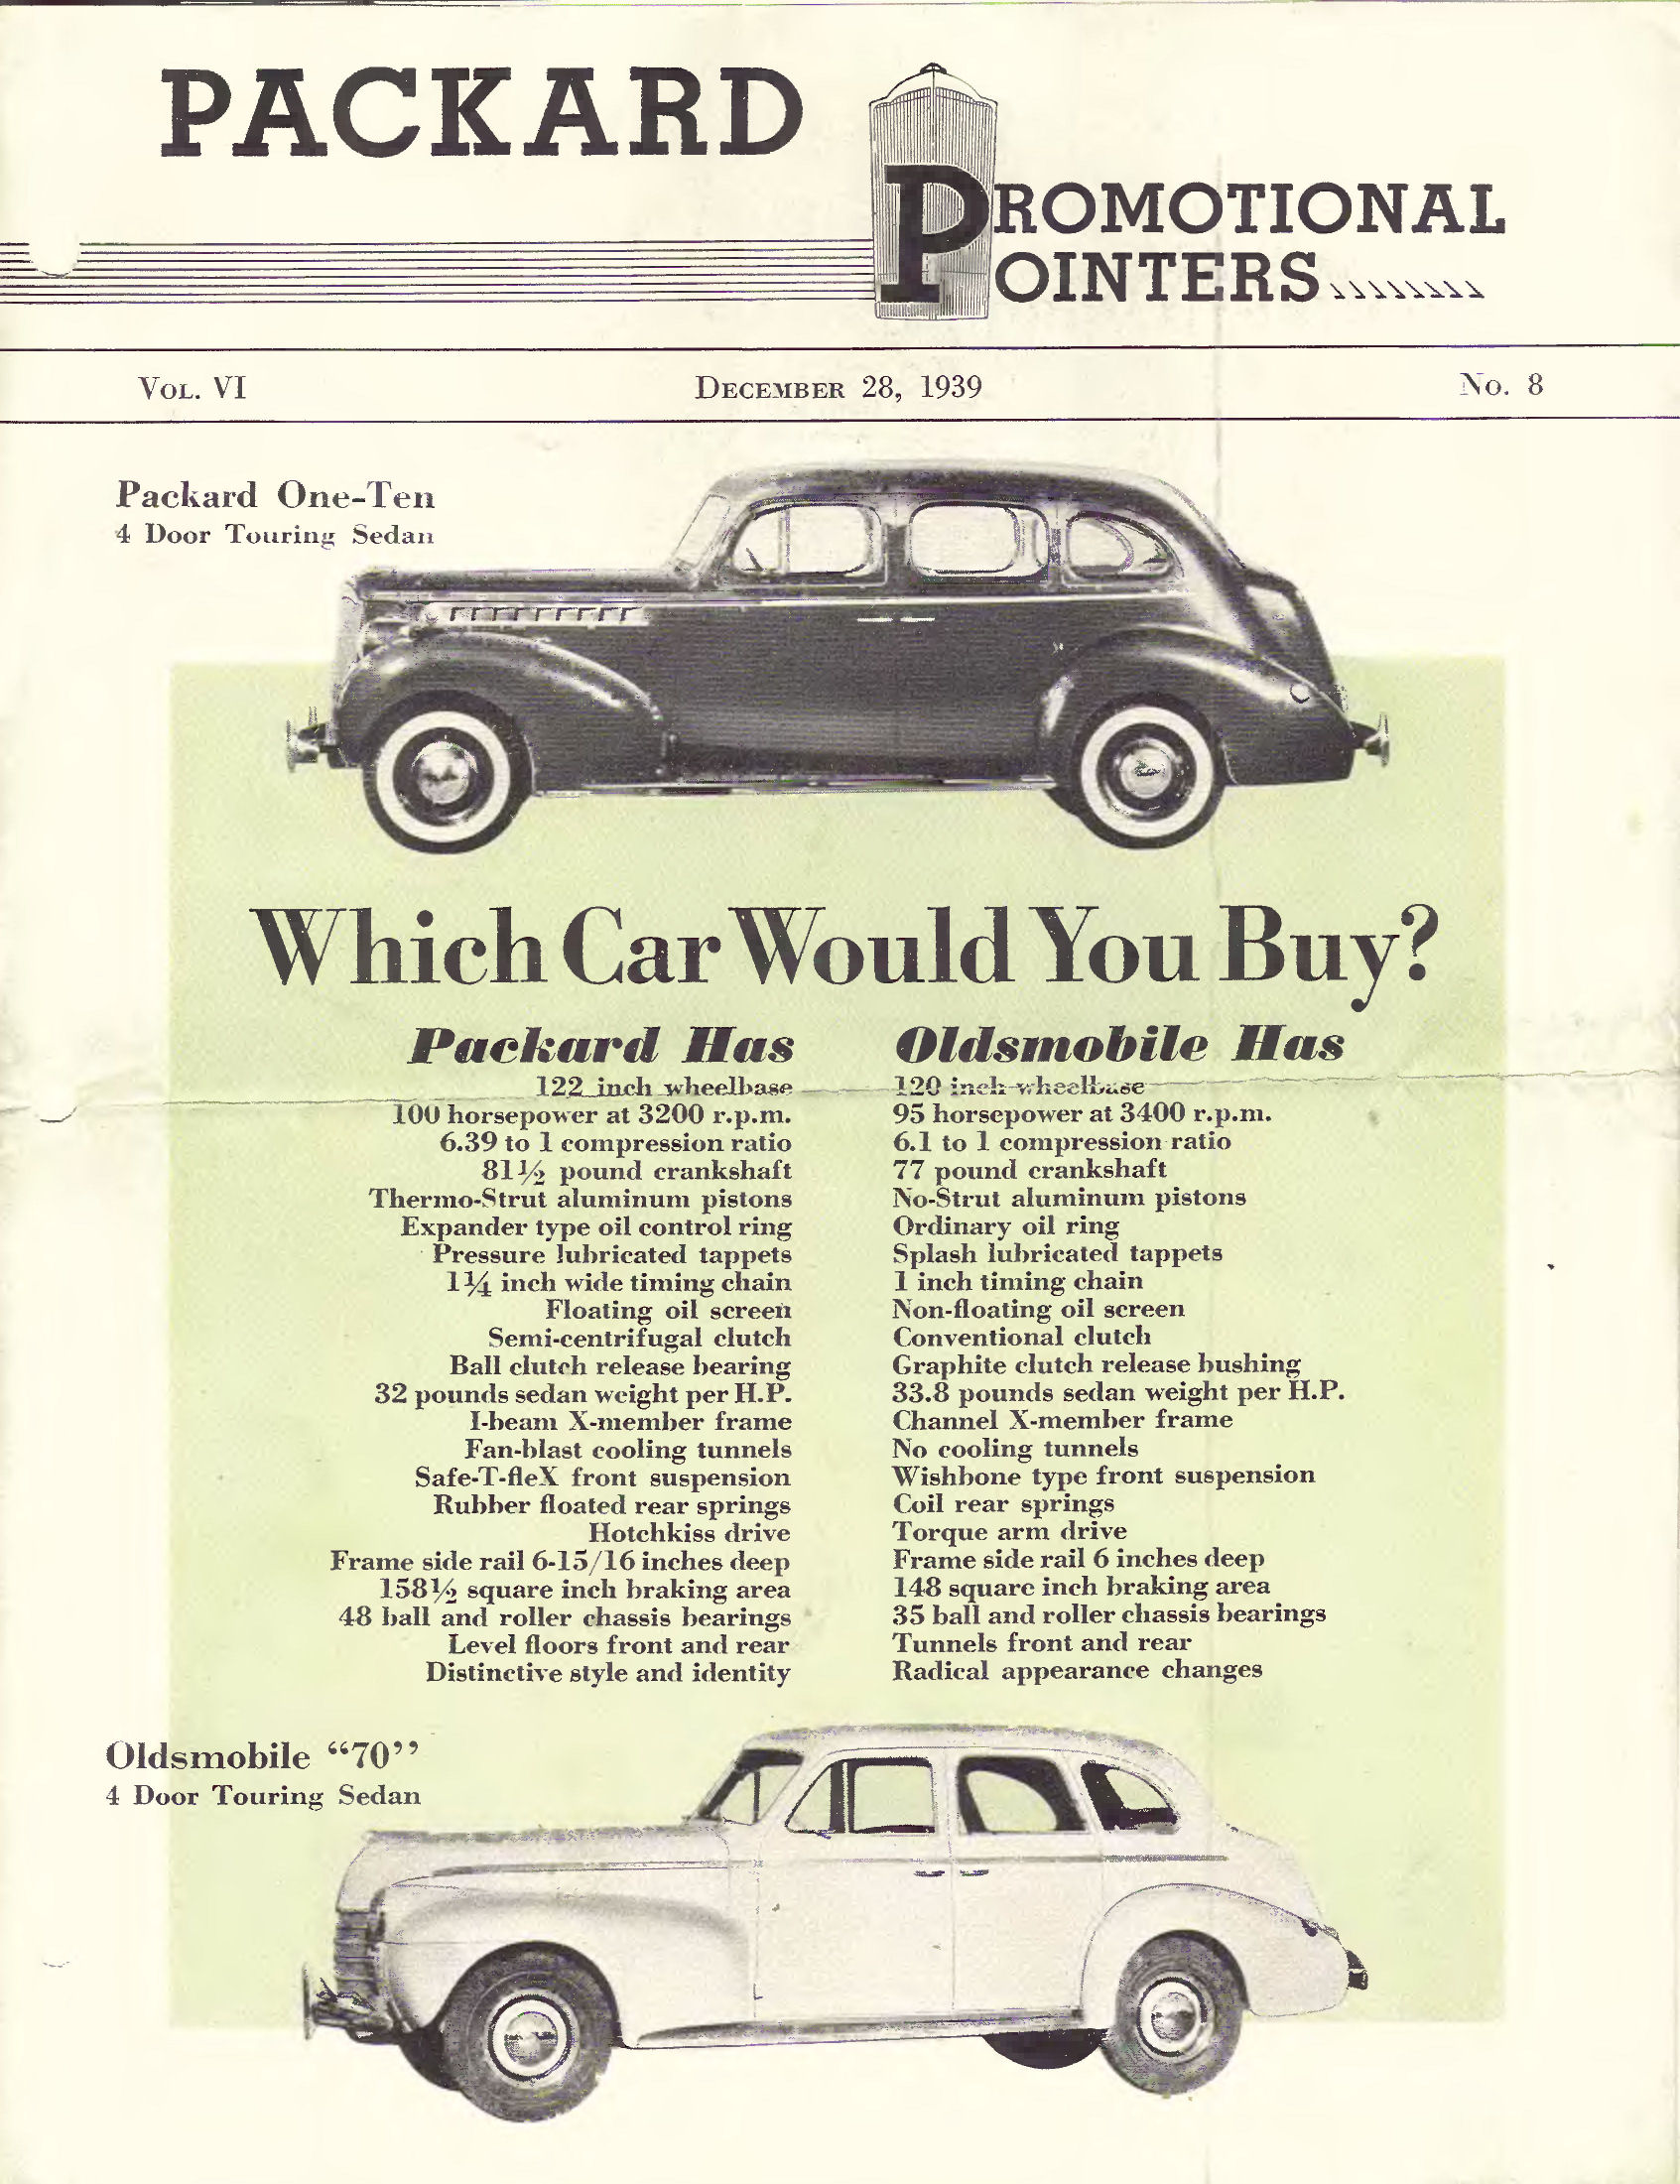 1940 Packard vs. Oldsmobile Comparison Folder